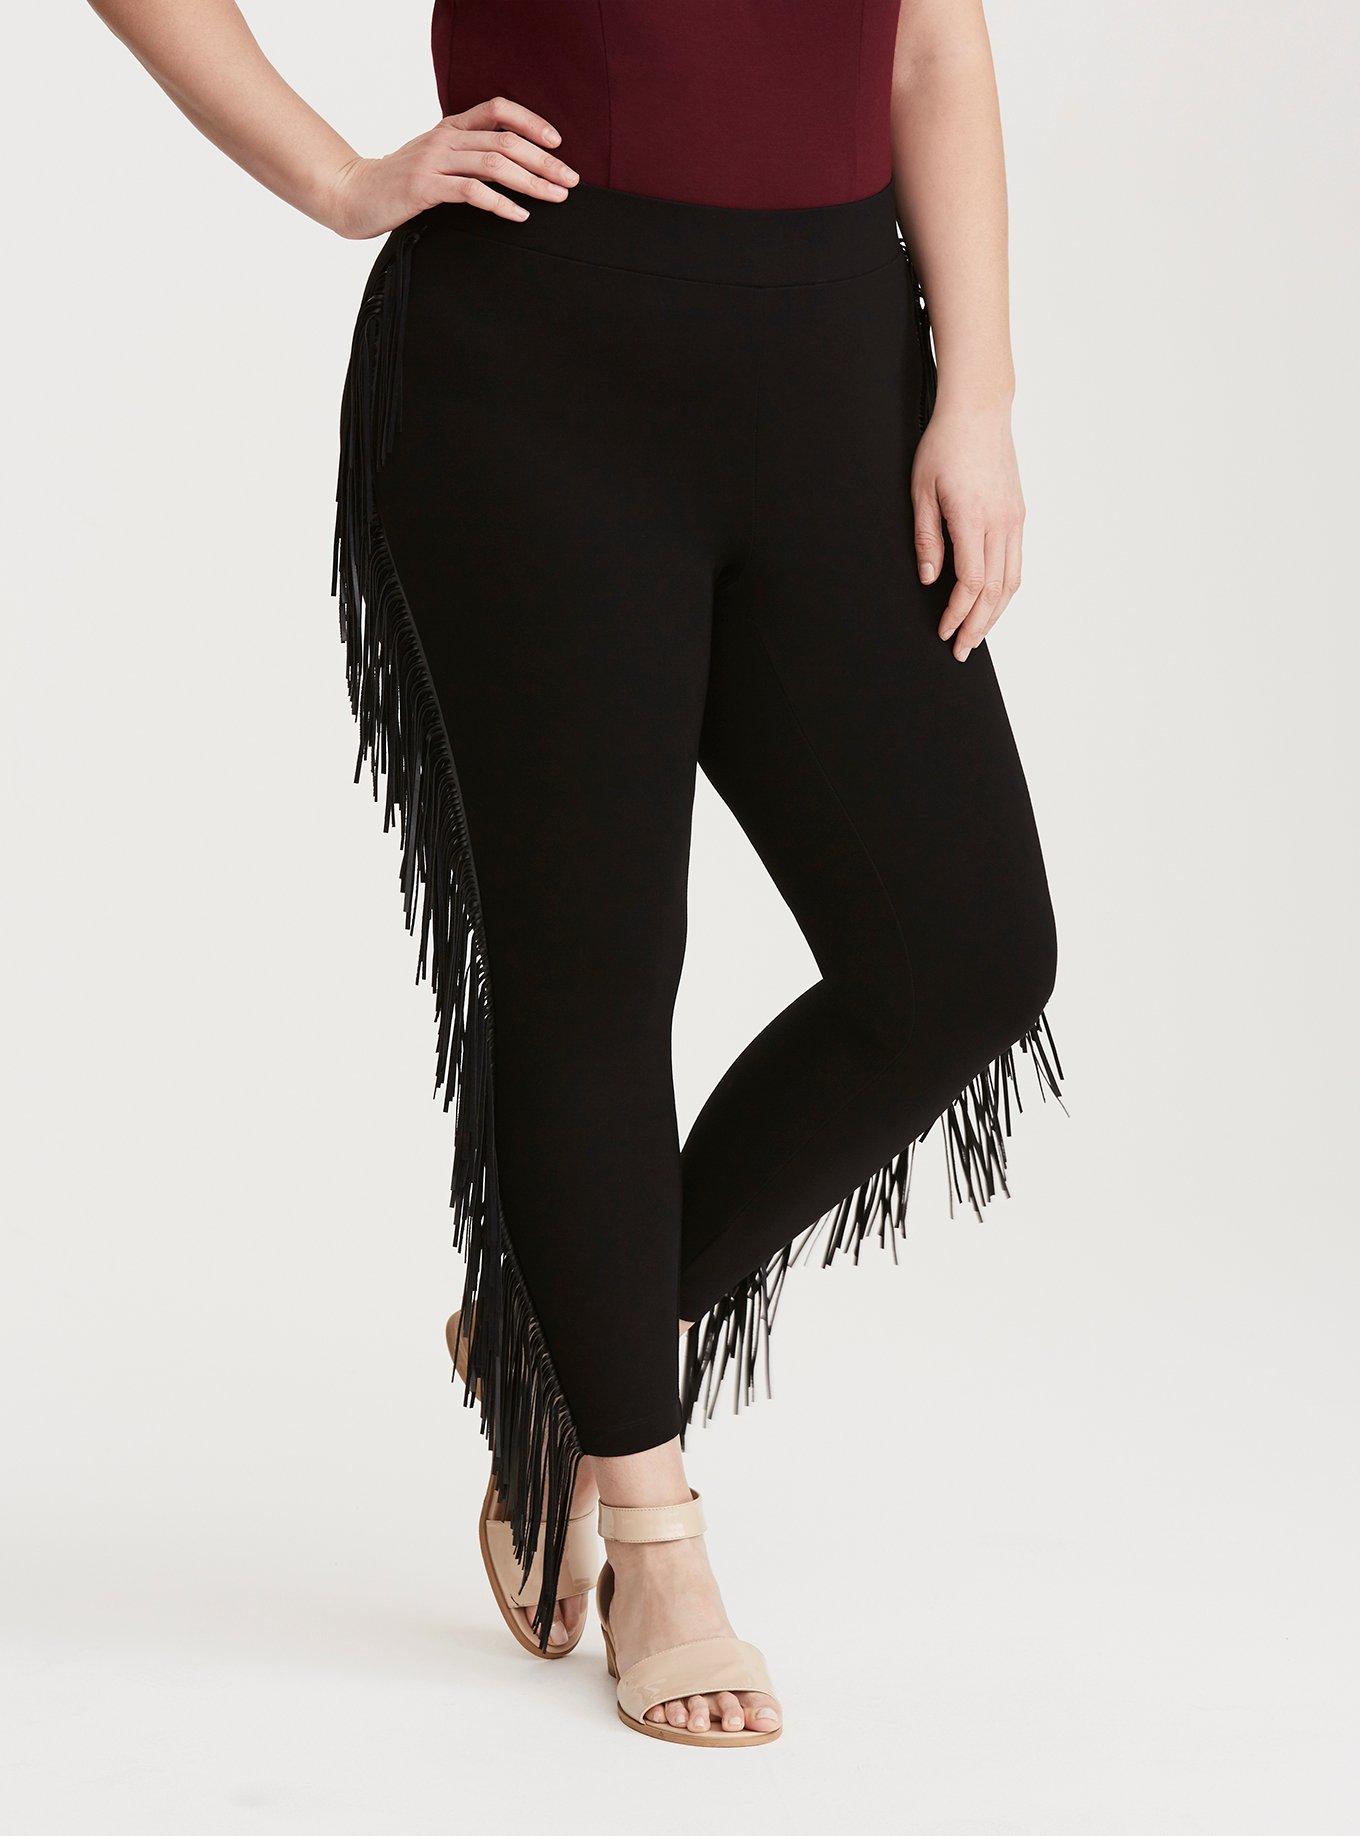 Jessica London Women's Plus Size Ponte Knit Leggings - 2x, Black